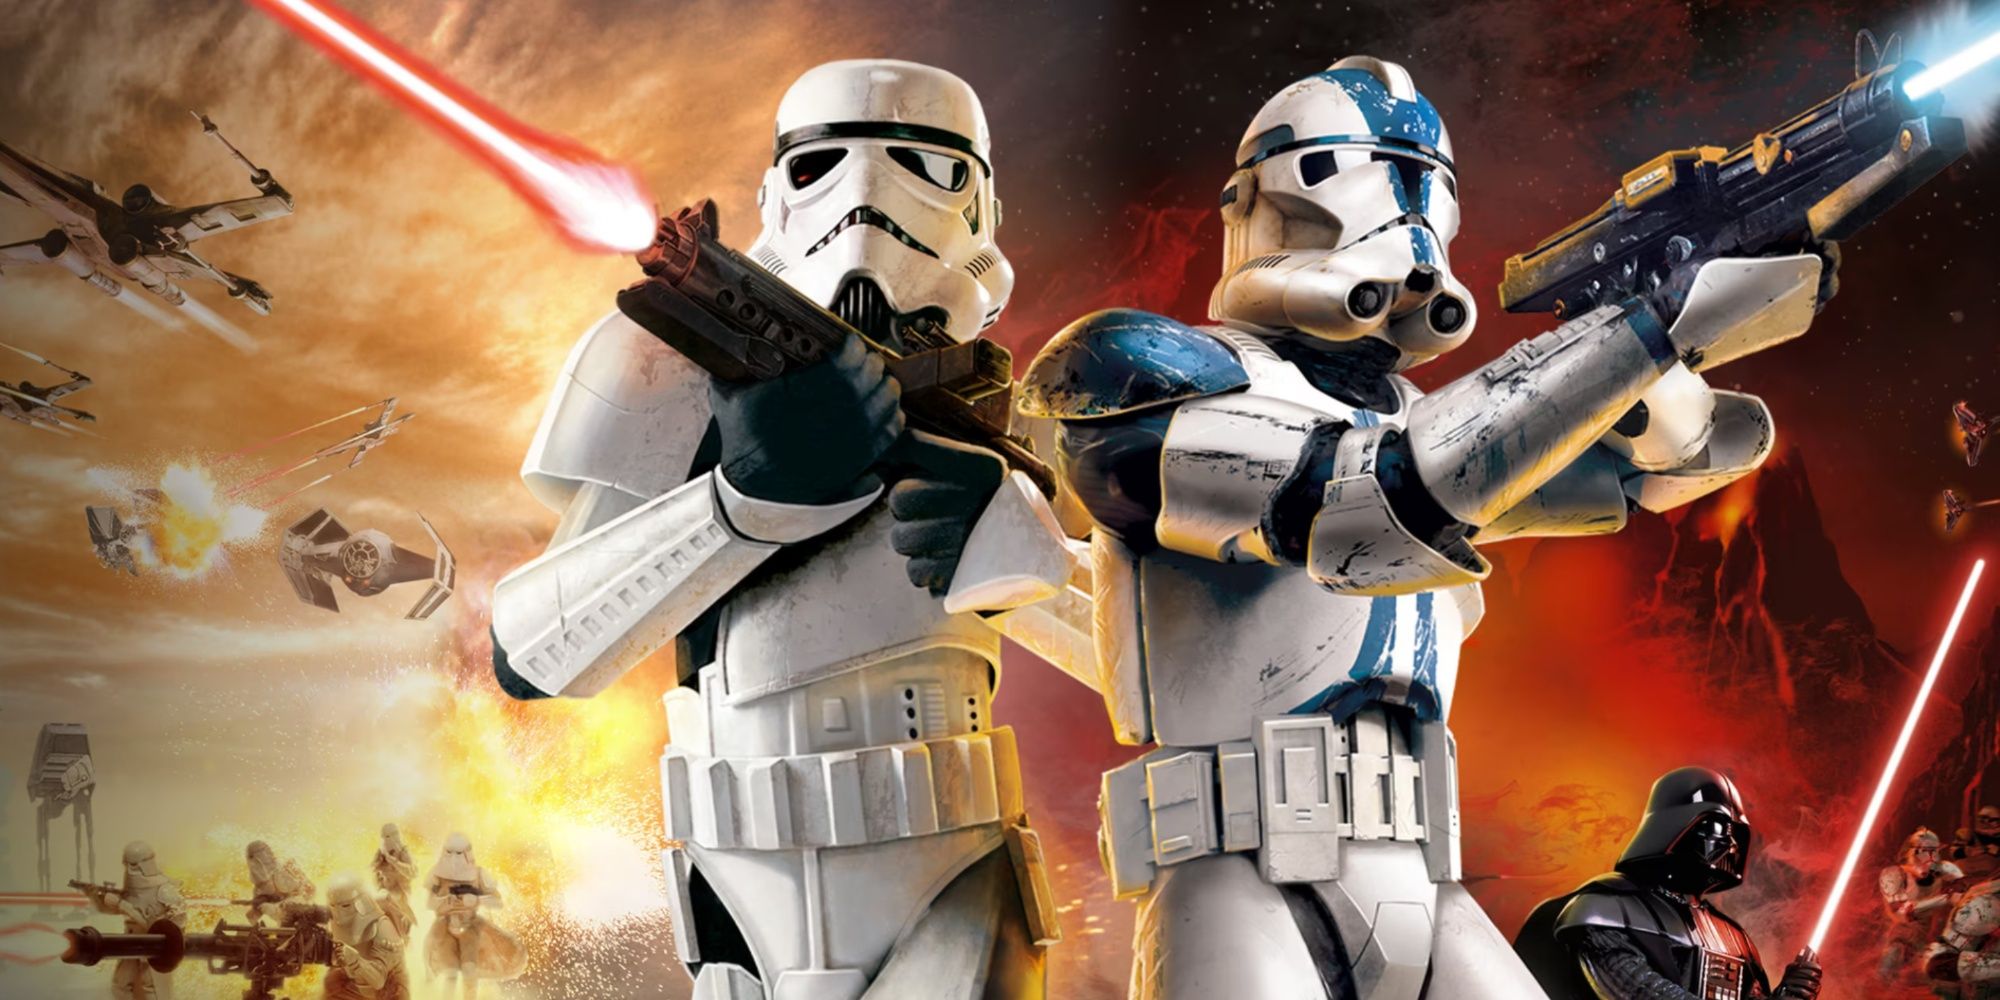 storm troopers firing blasters in star wars battlefront